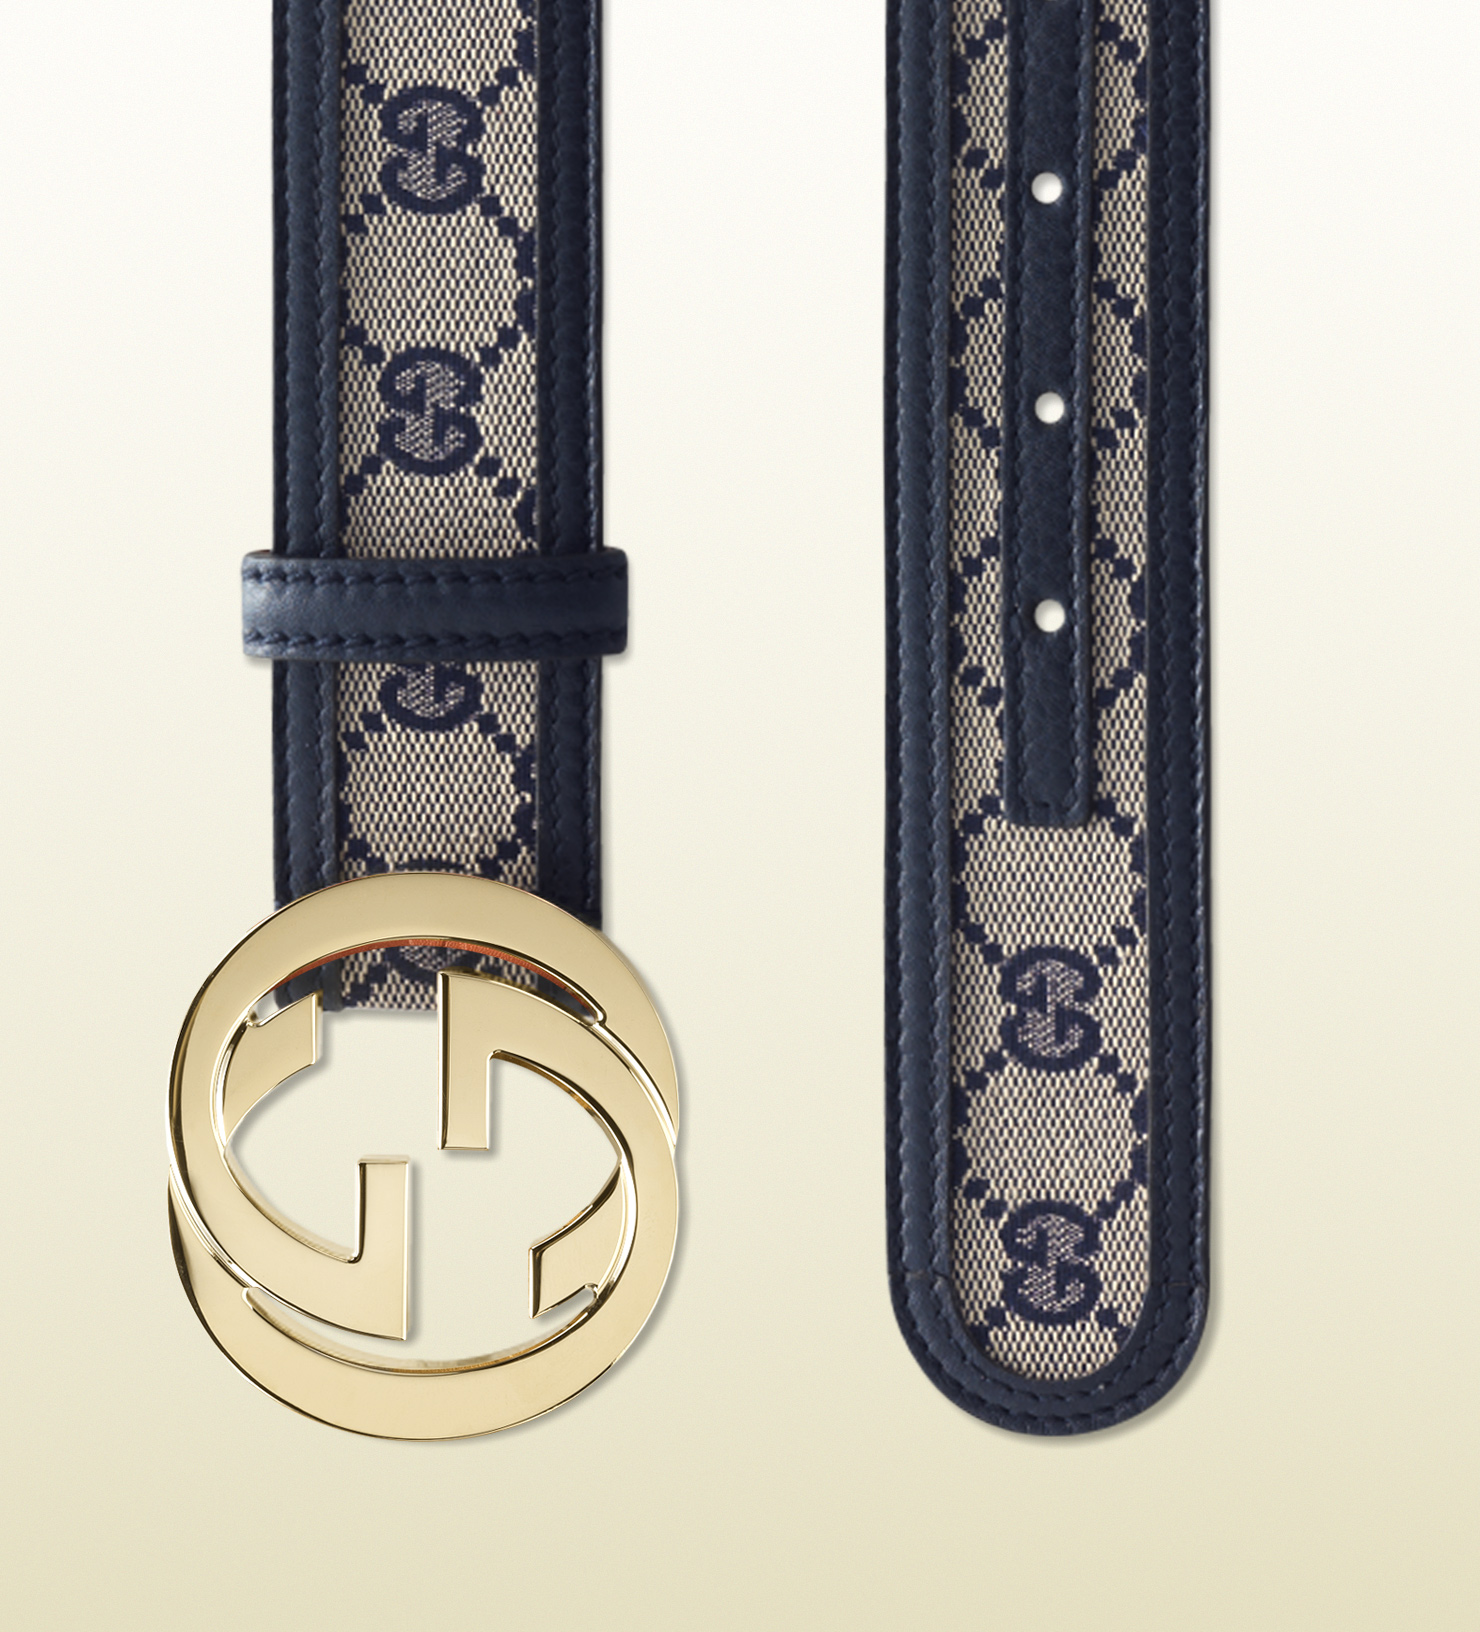 Gucci Belt with Interlocking G Buckle in Blue